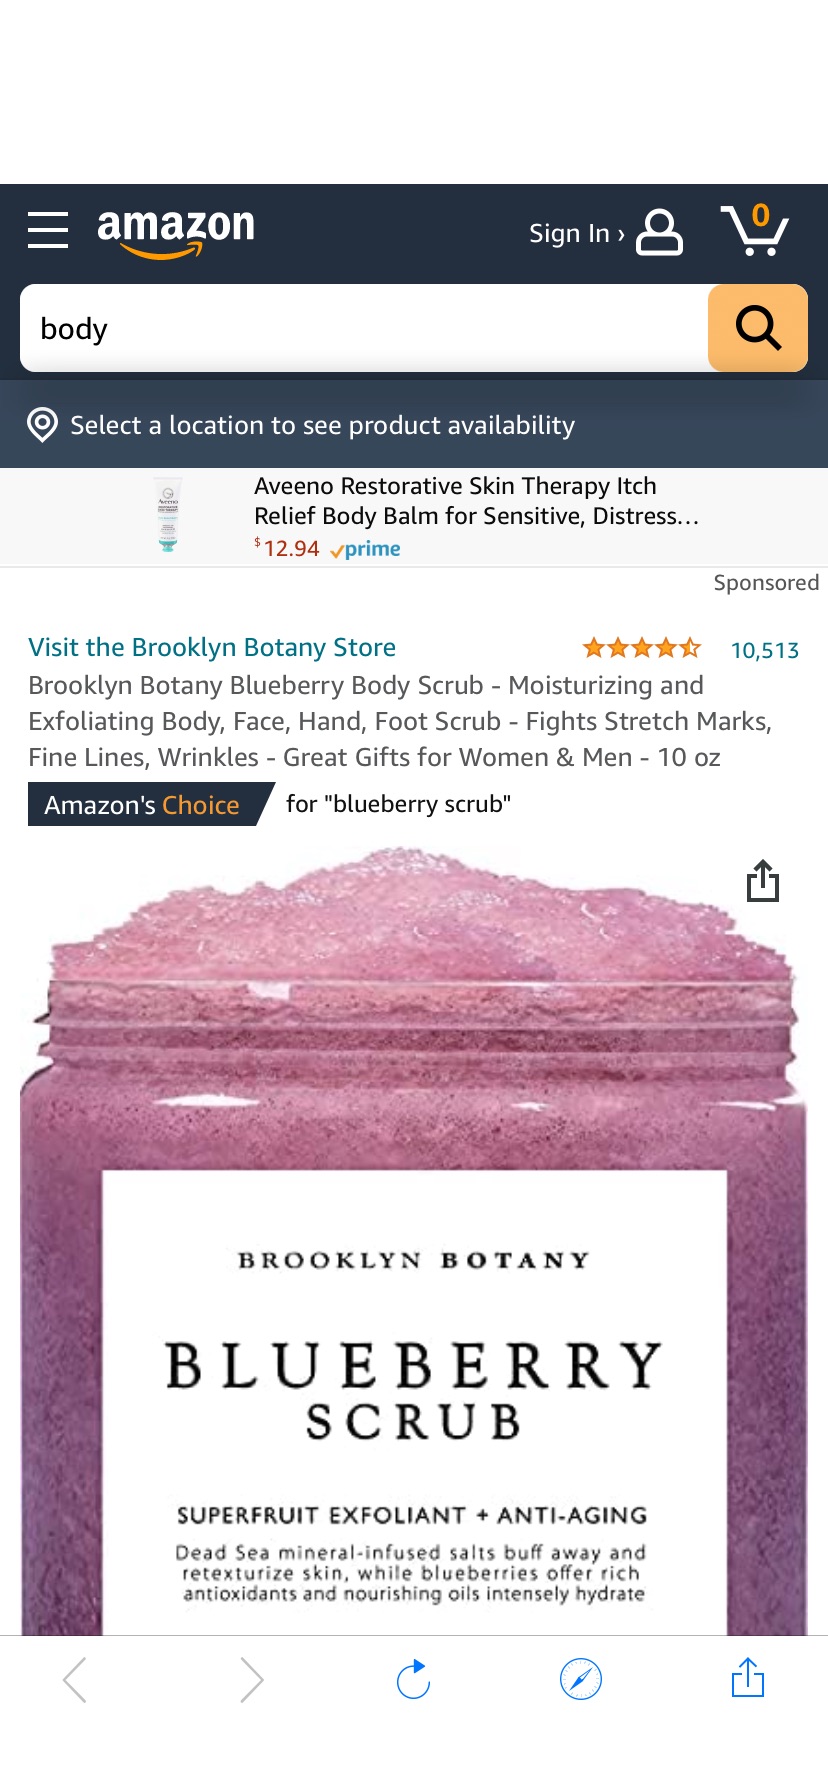 Amazon.com : Brooklyn Botany Blueberry Body Scrub - Moisturizing and Exfoliating Body, Face, Hand, Foot Scrub - Fights Stretch Marks, Fine Lines, Wrinkles身体磨砂